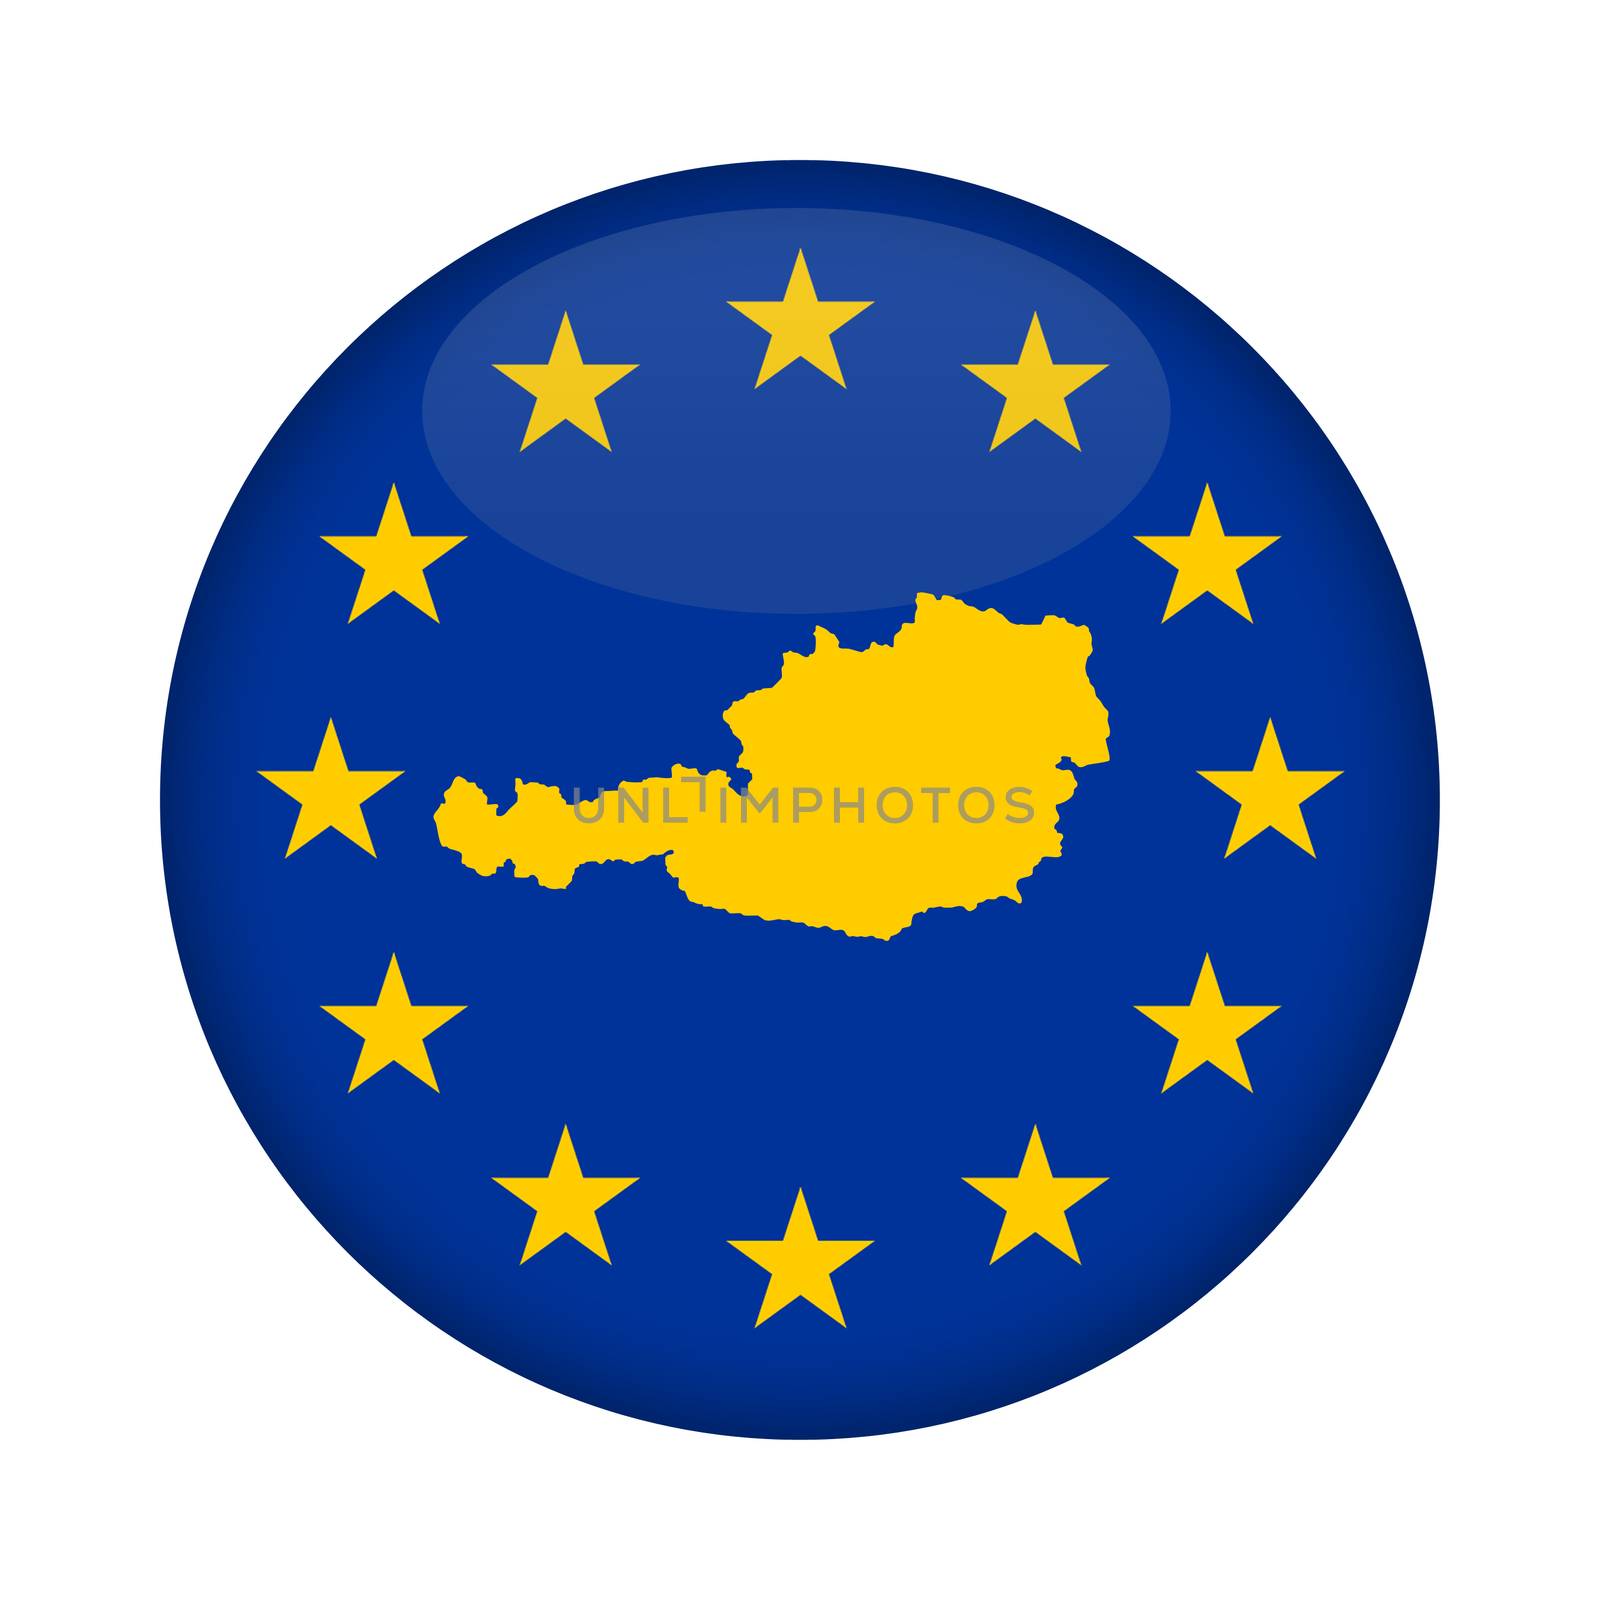 Austria map on a European Union flag button isolated on a white background.